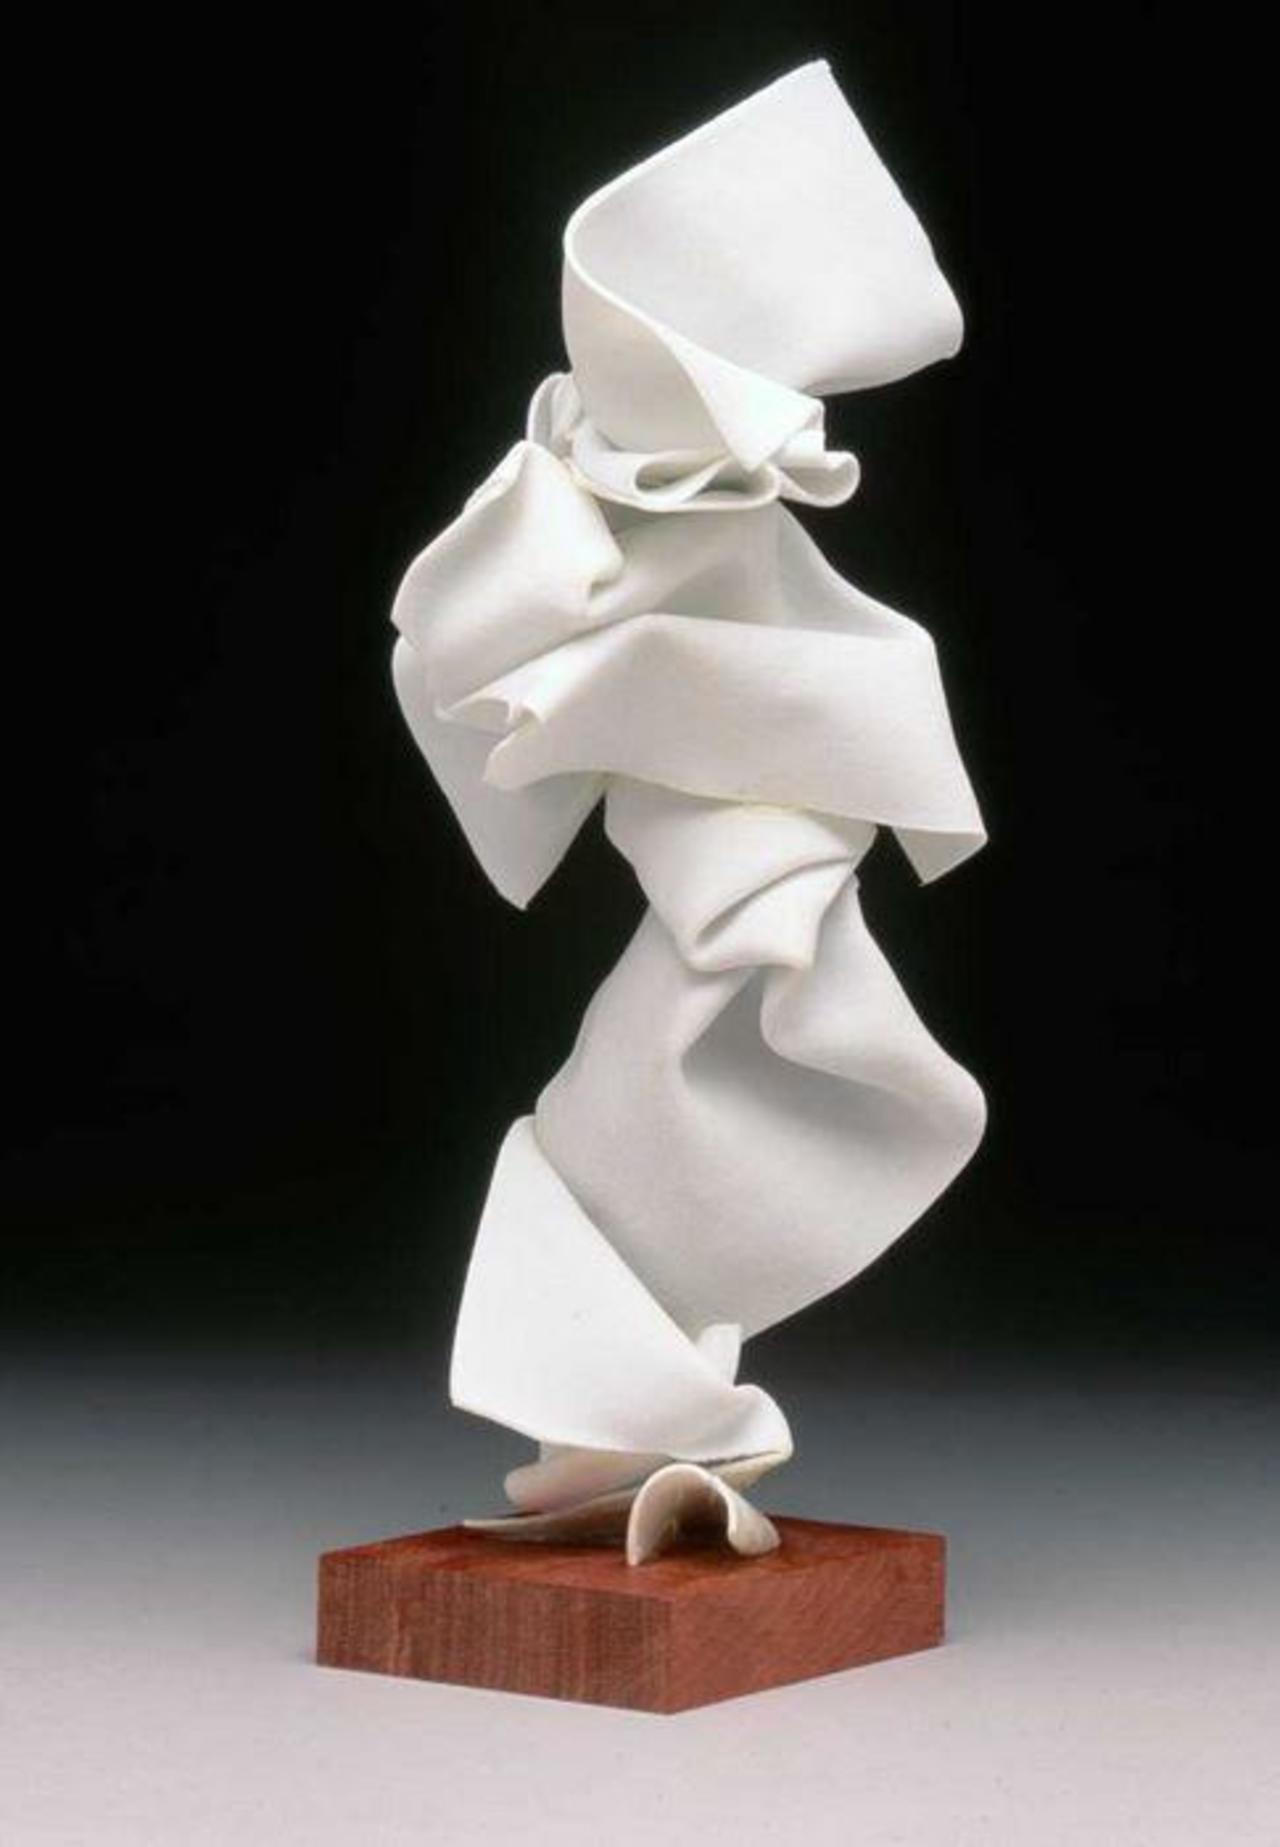 porcelain poetry http://abramsclaghorn.com/artists/maru-hoeber/ #ceramics #art #sculpture http://t.co/MsH8hwtdmp